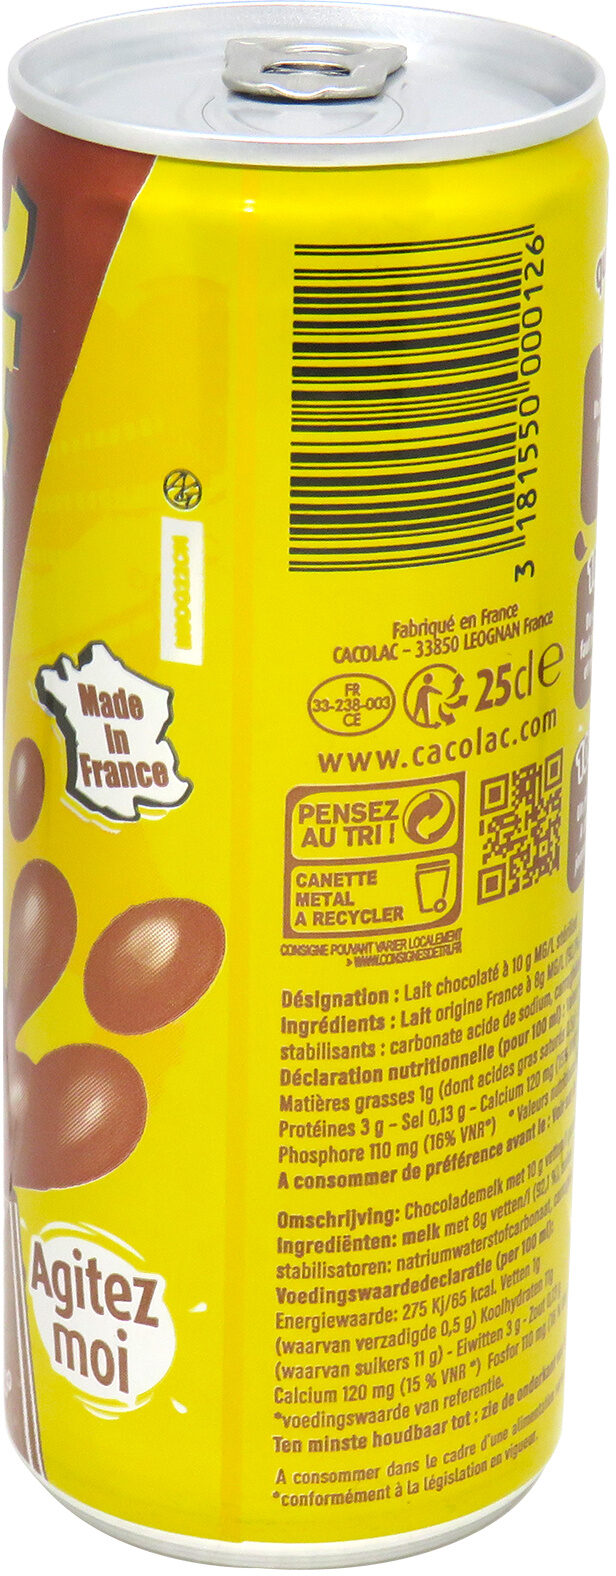 Lait aromatisé cacao - Nutrition facts - fr